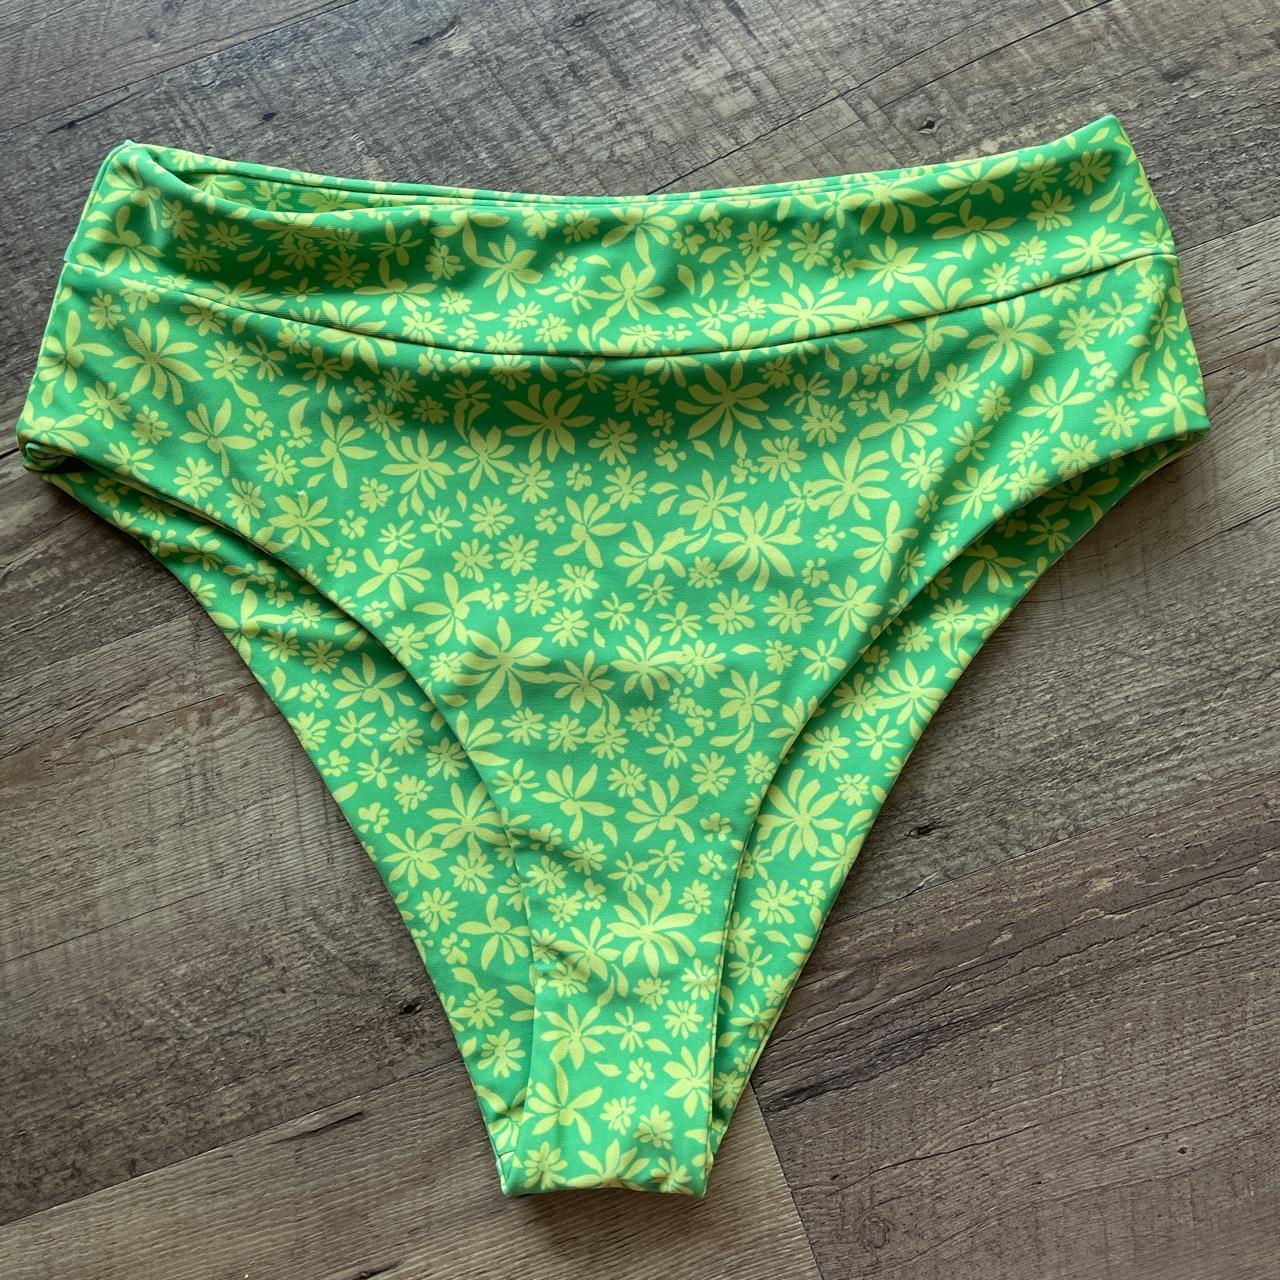 Kulani Kinis Women's Green and Yellow Bikinis-and-tankini-sets (2)